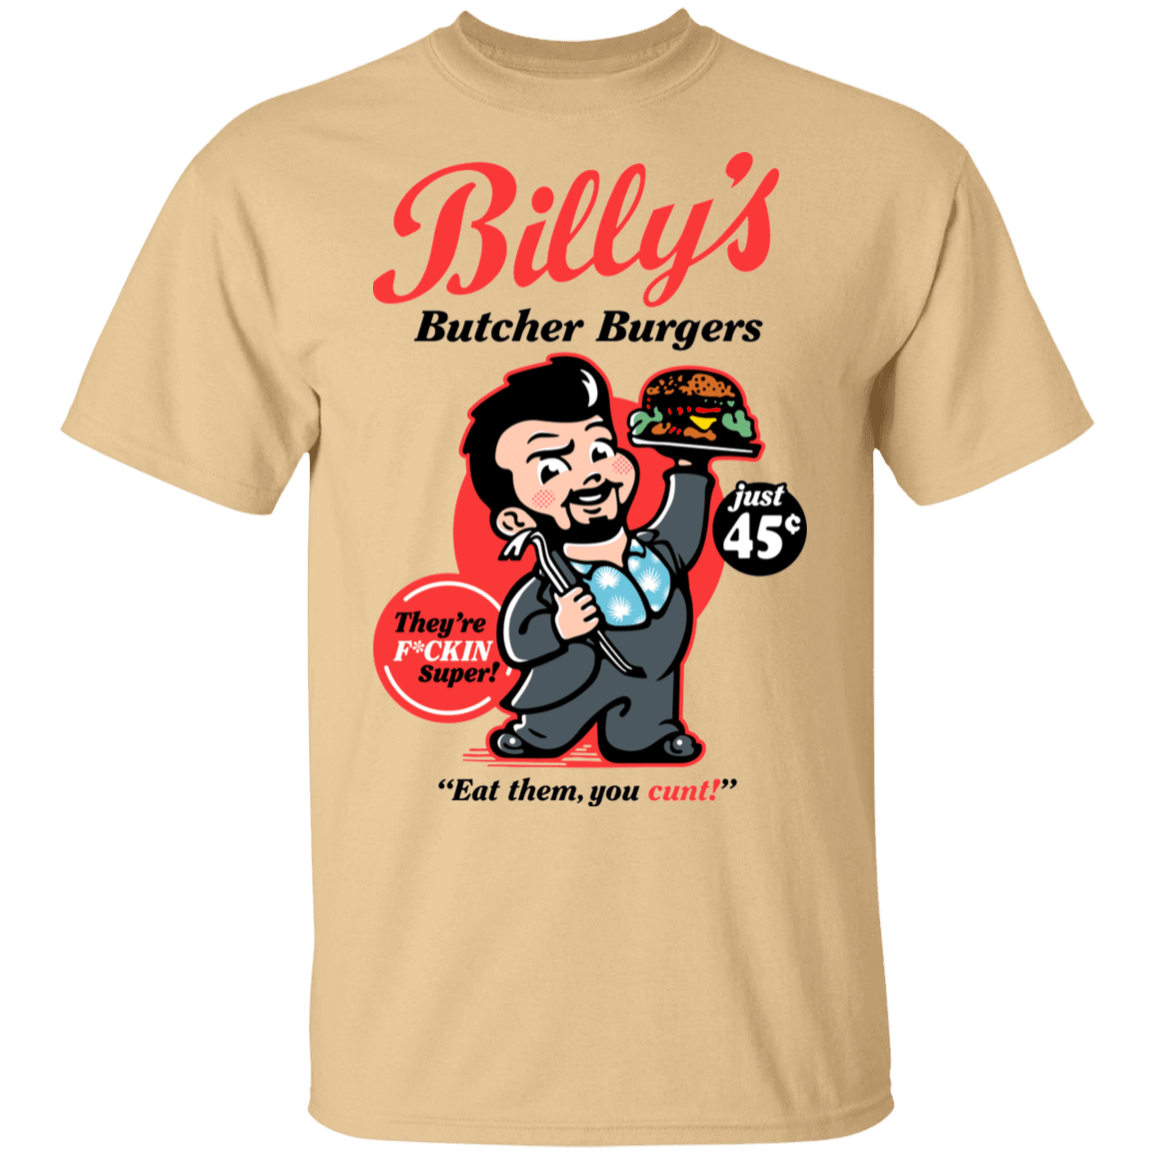 T-Shirts Vegas Gold / S Billy Butcher Burgers T-Shirt